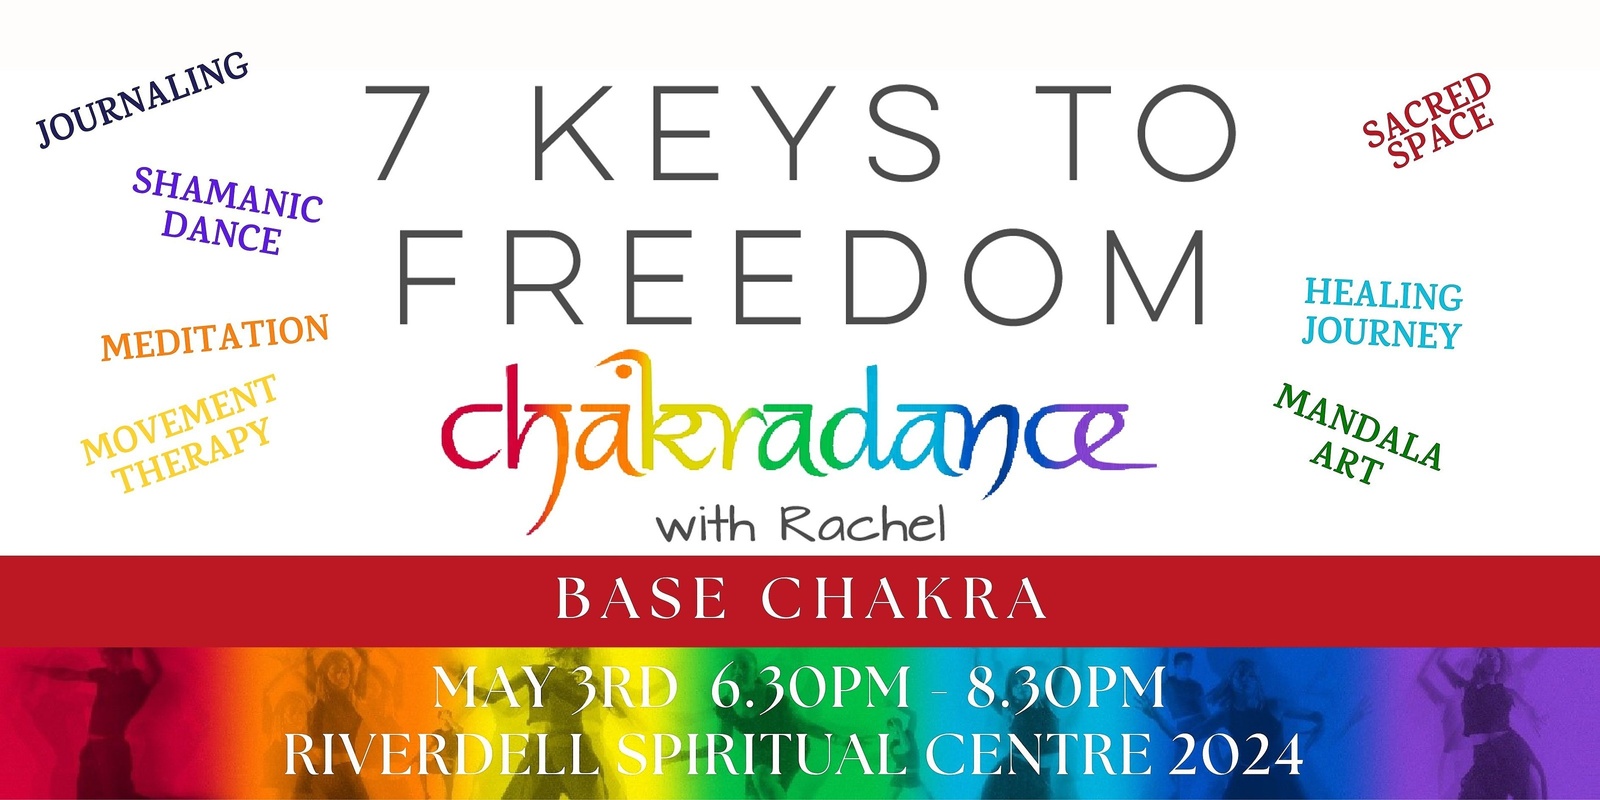 Banner image for 7 KEYS TO FREEDOM - Base Chakra - CHAKRADANCE with Rachel